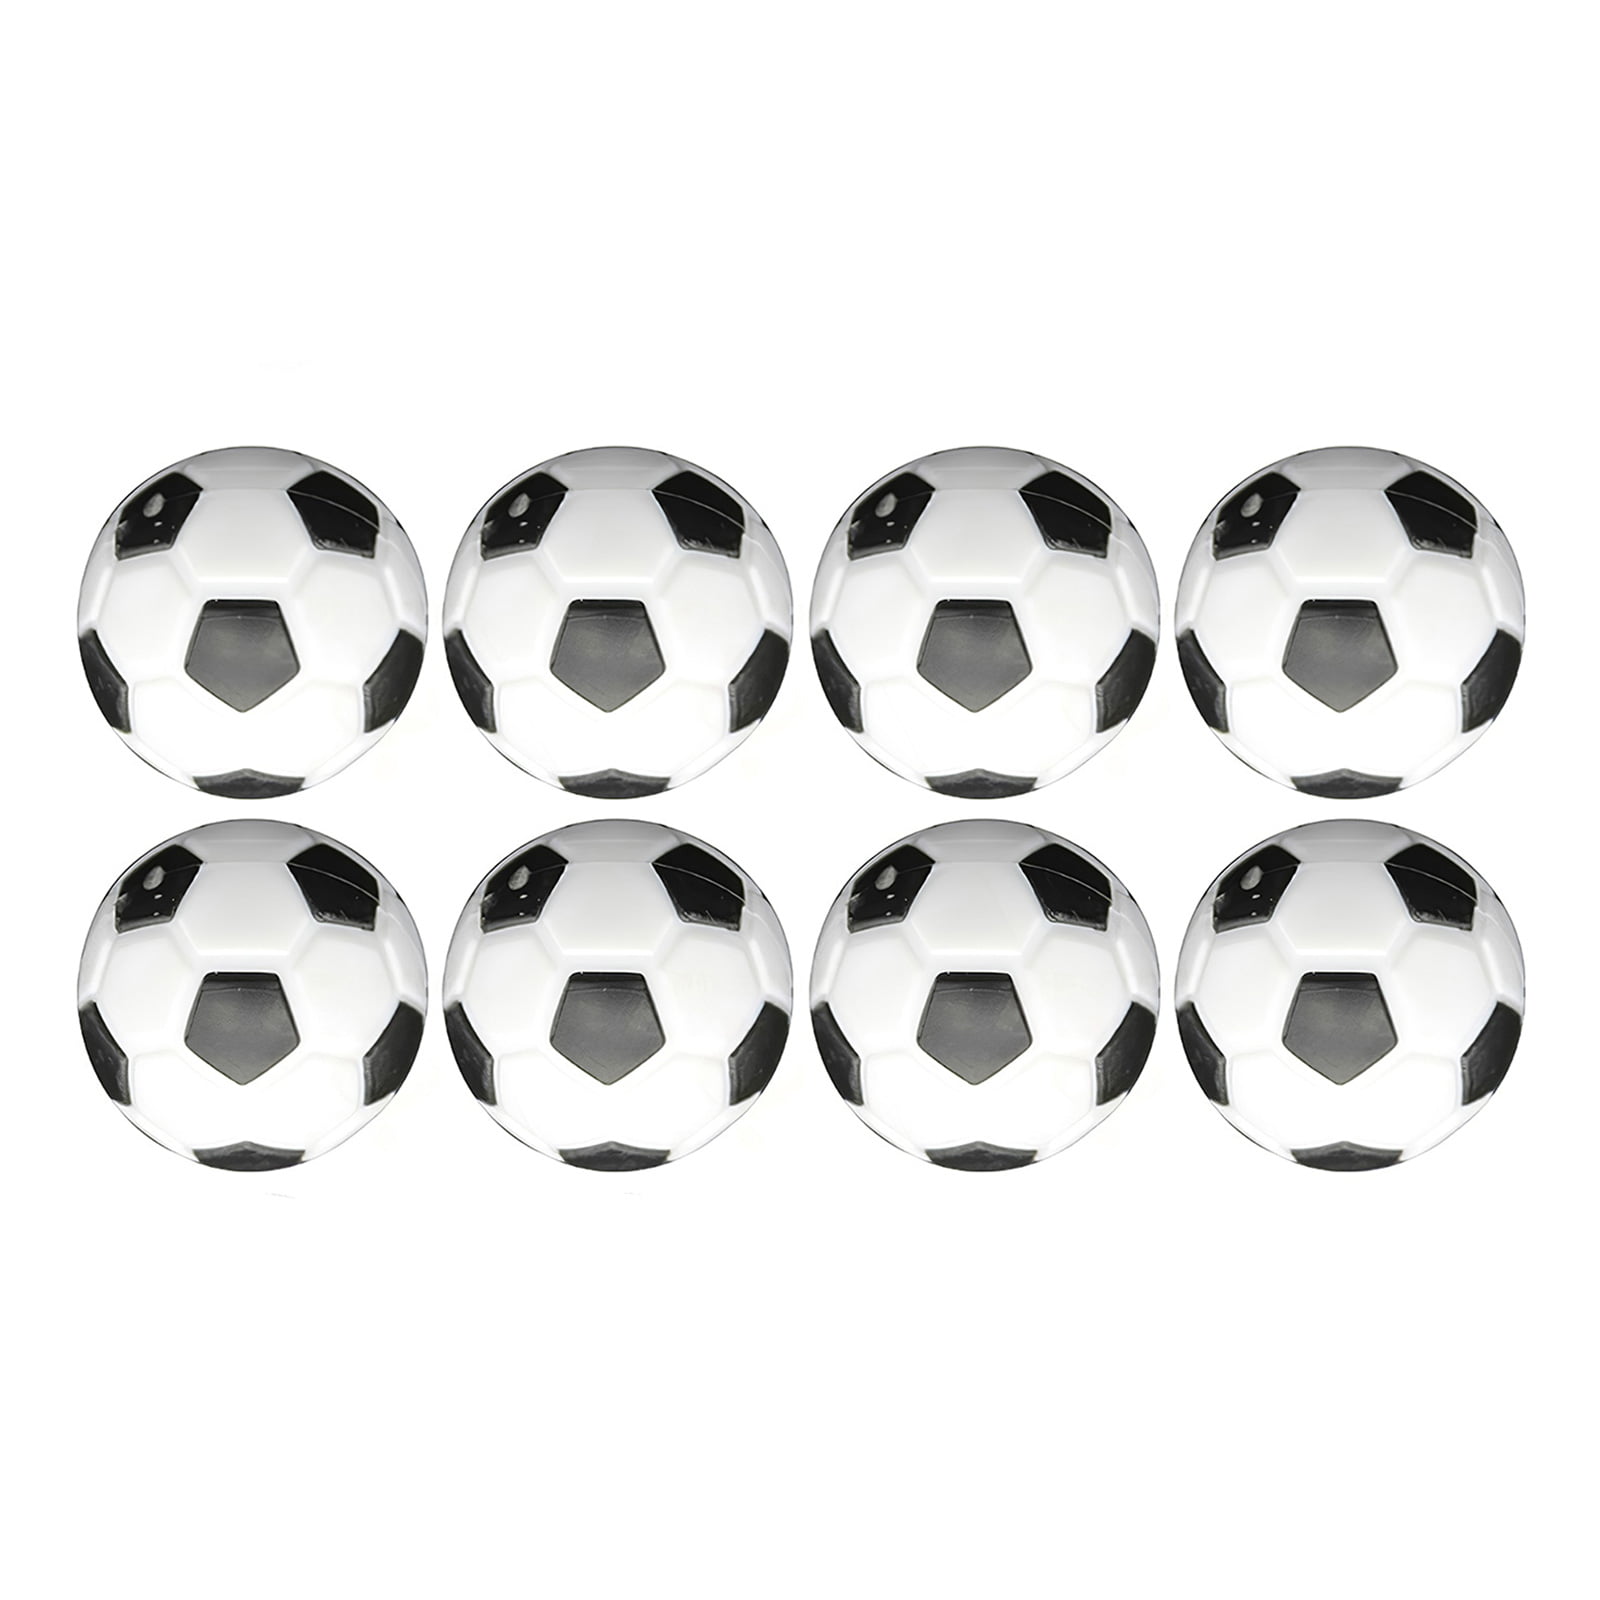 Foosball Indoor Game Football Accessories Black White Soccer Practical 